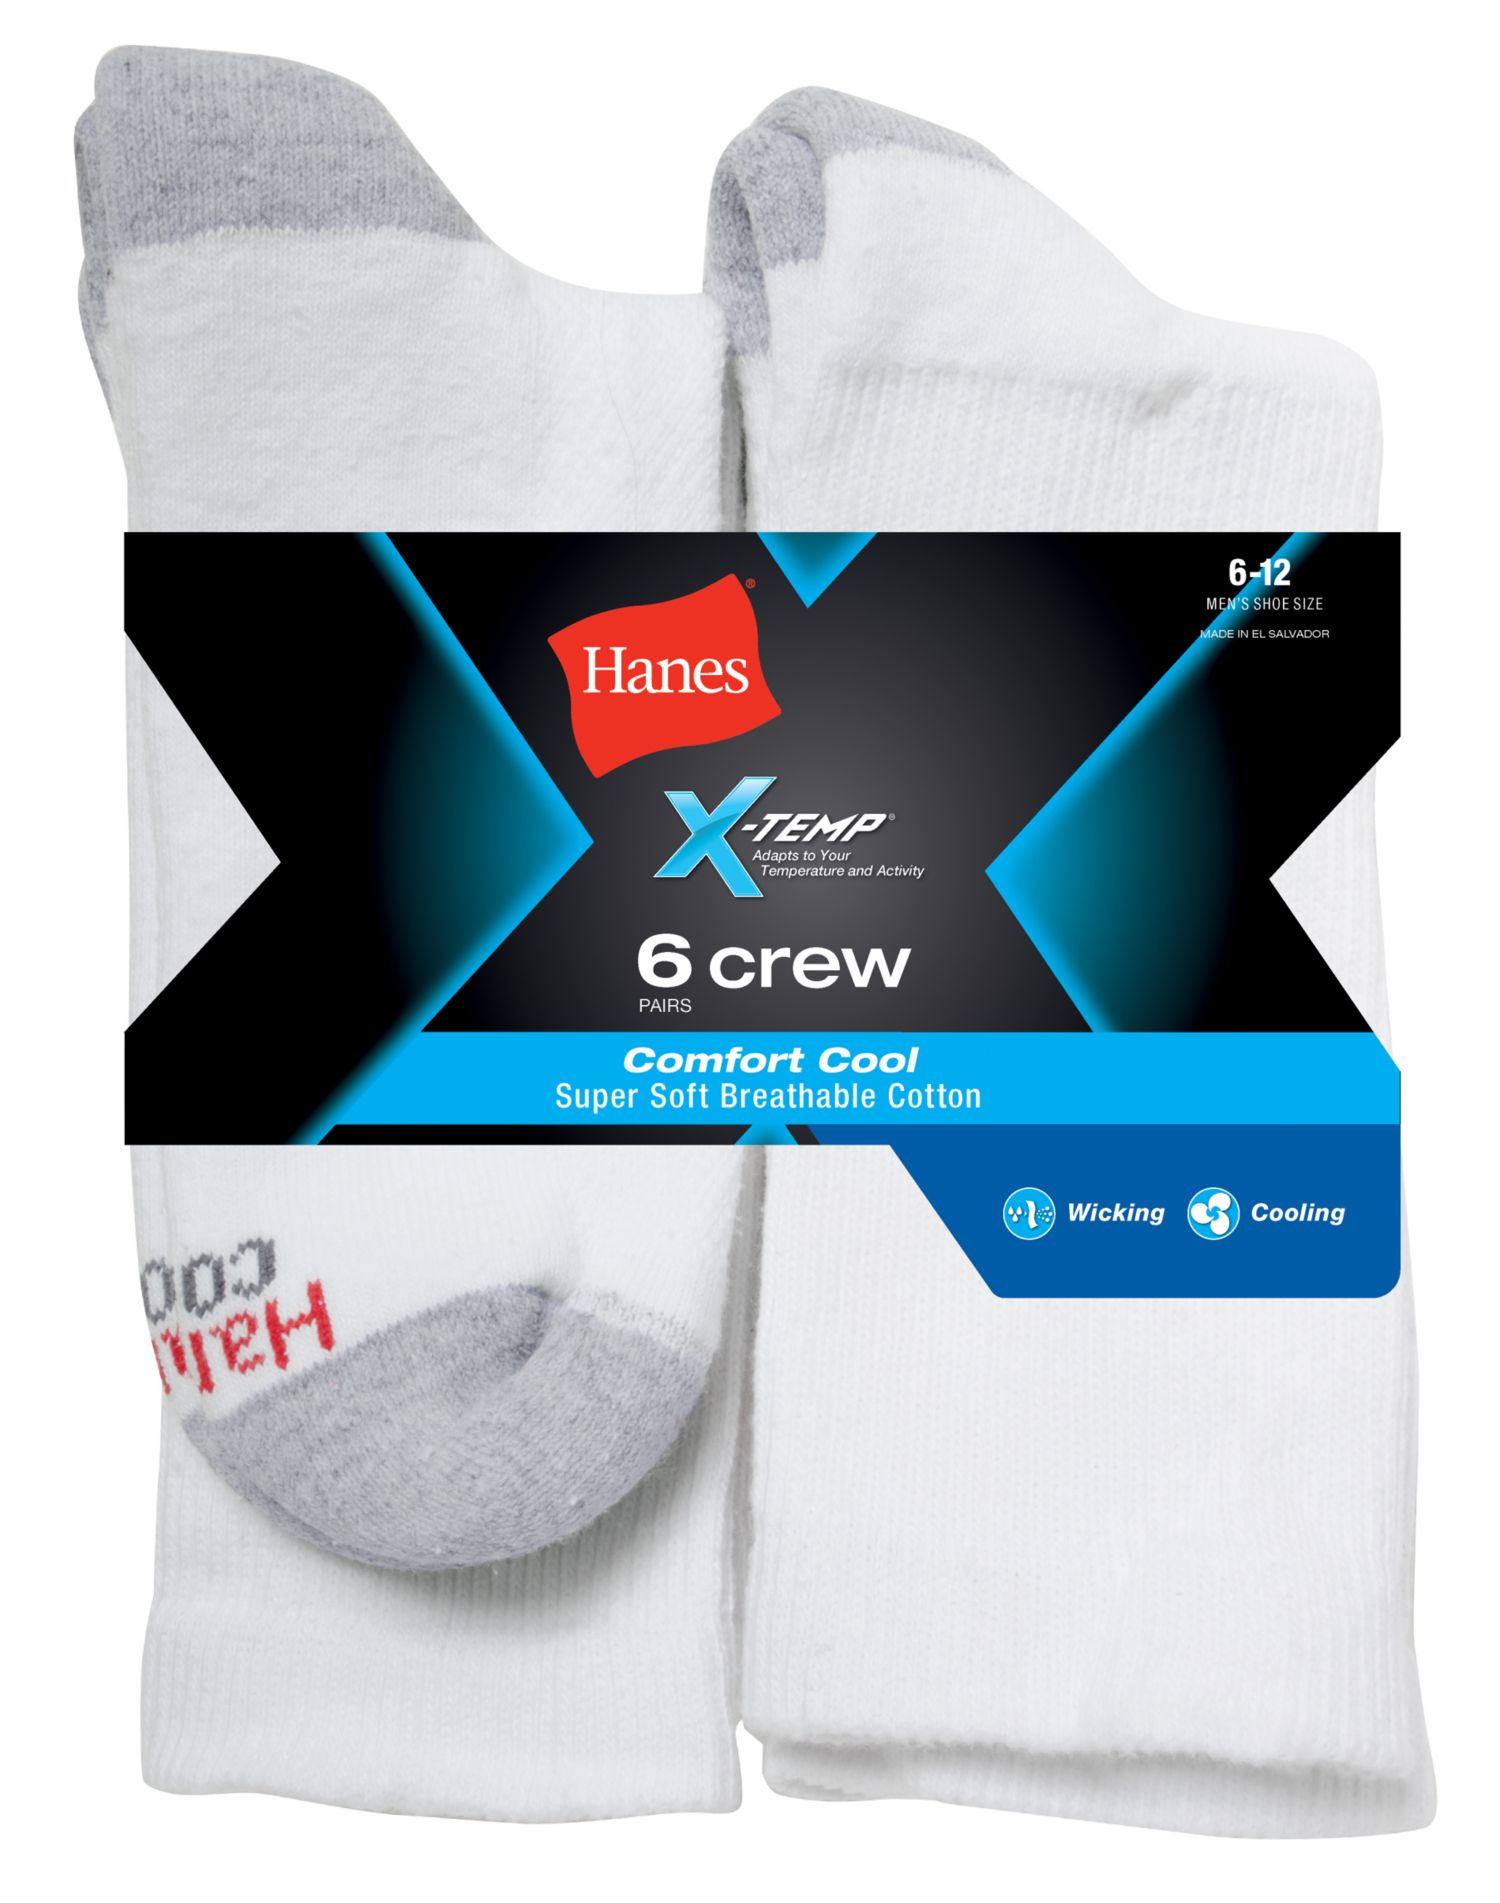 Hanes Mens FreshIQ X Temp Comfort Cool Crew Socks Pack Apparel Direct Distributor